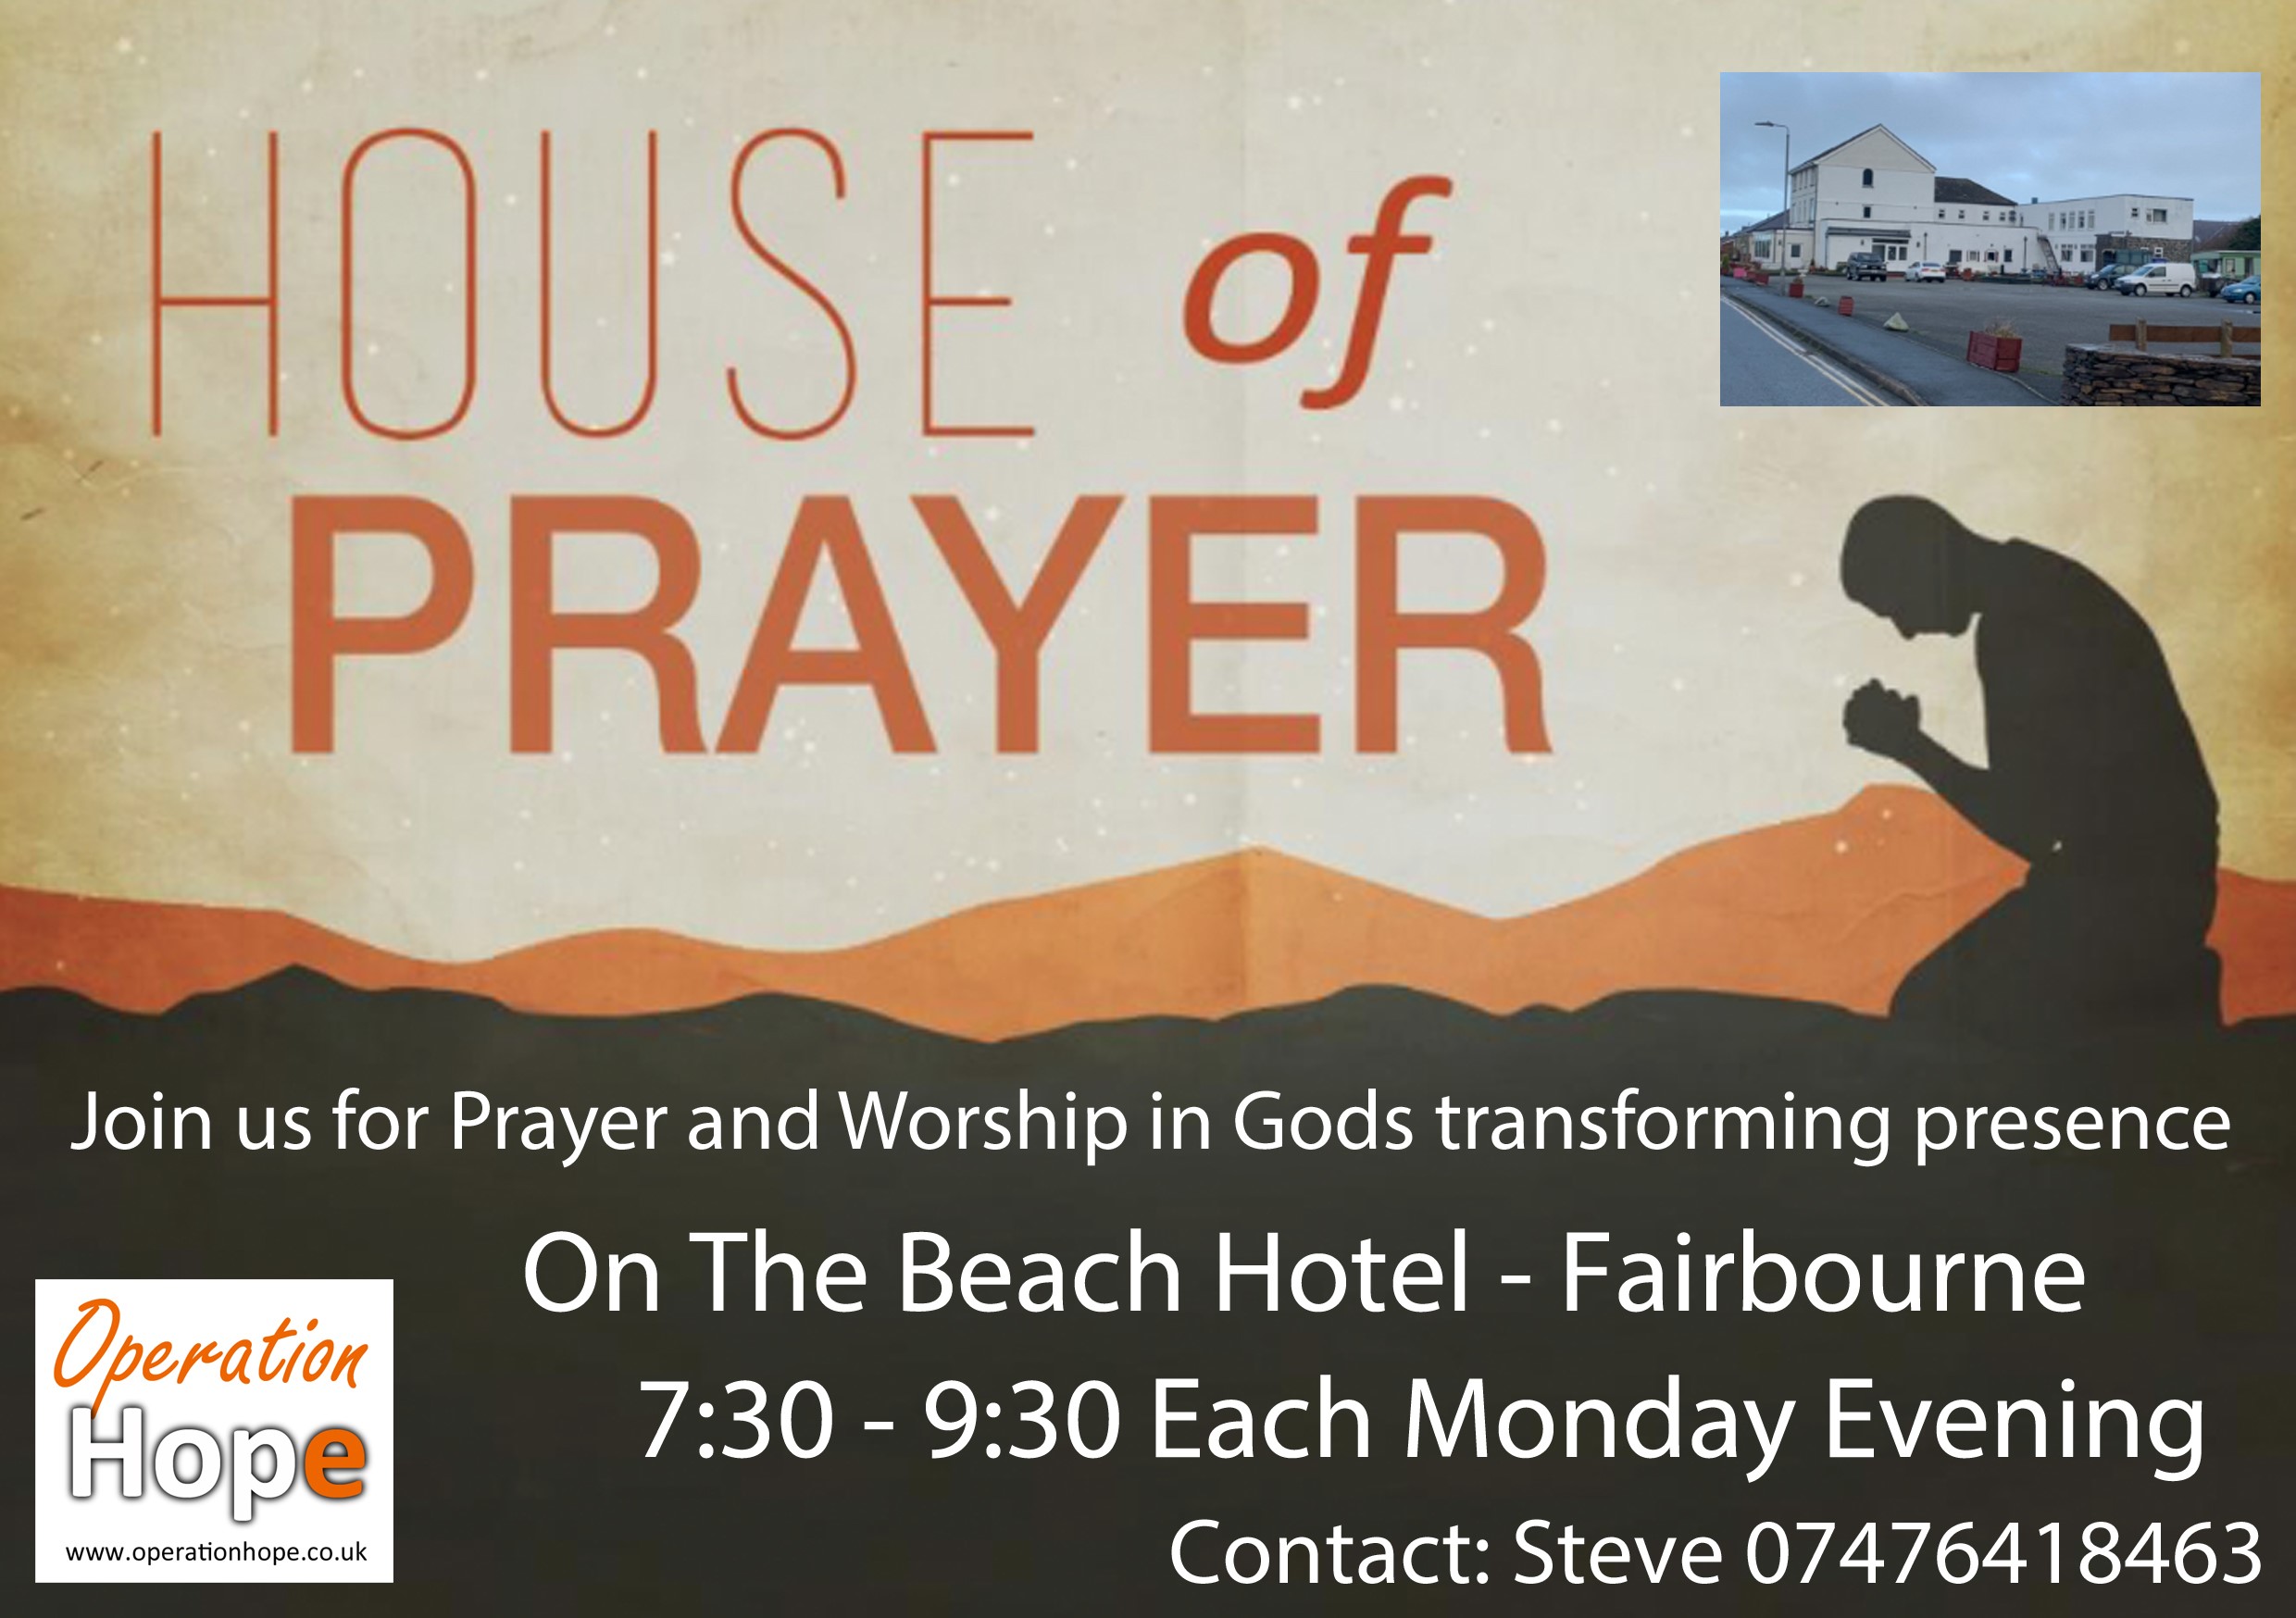 operation hope - house of prayer